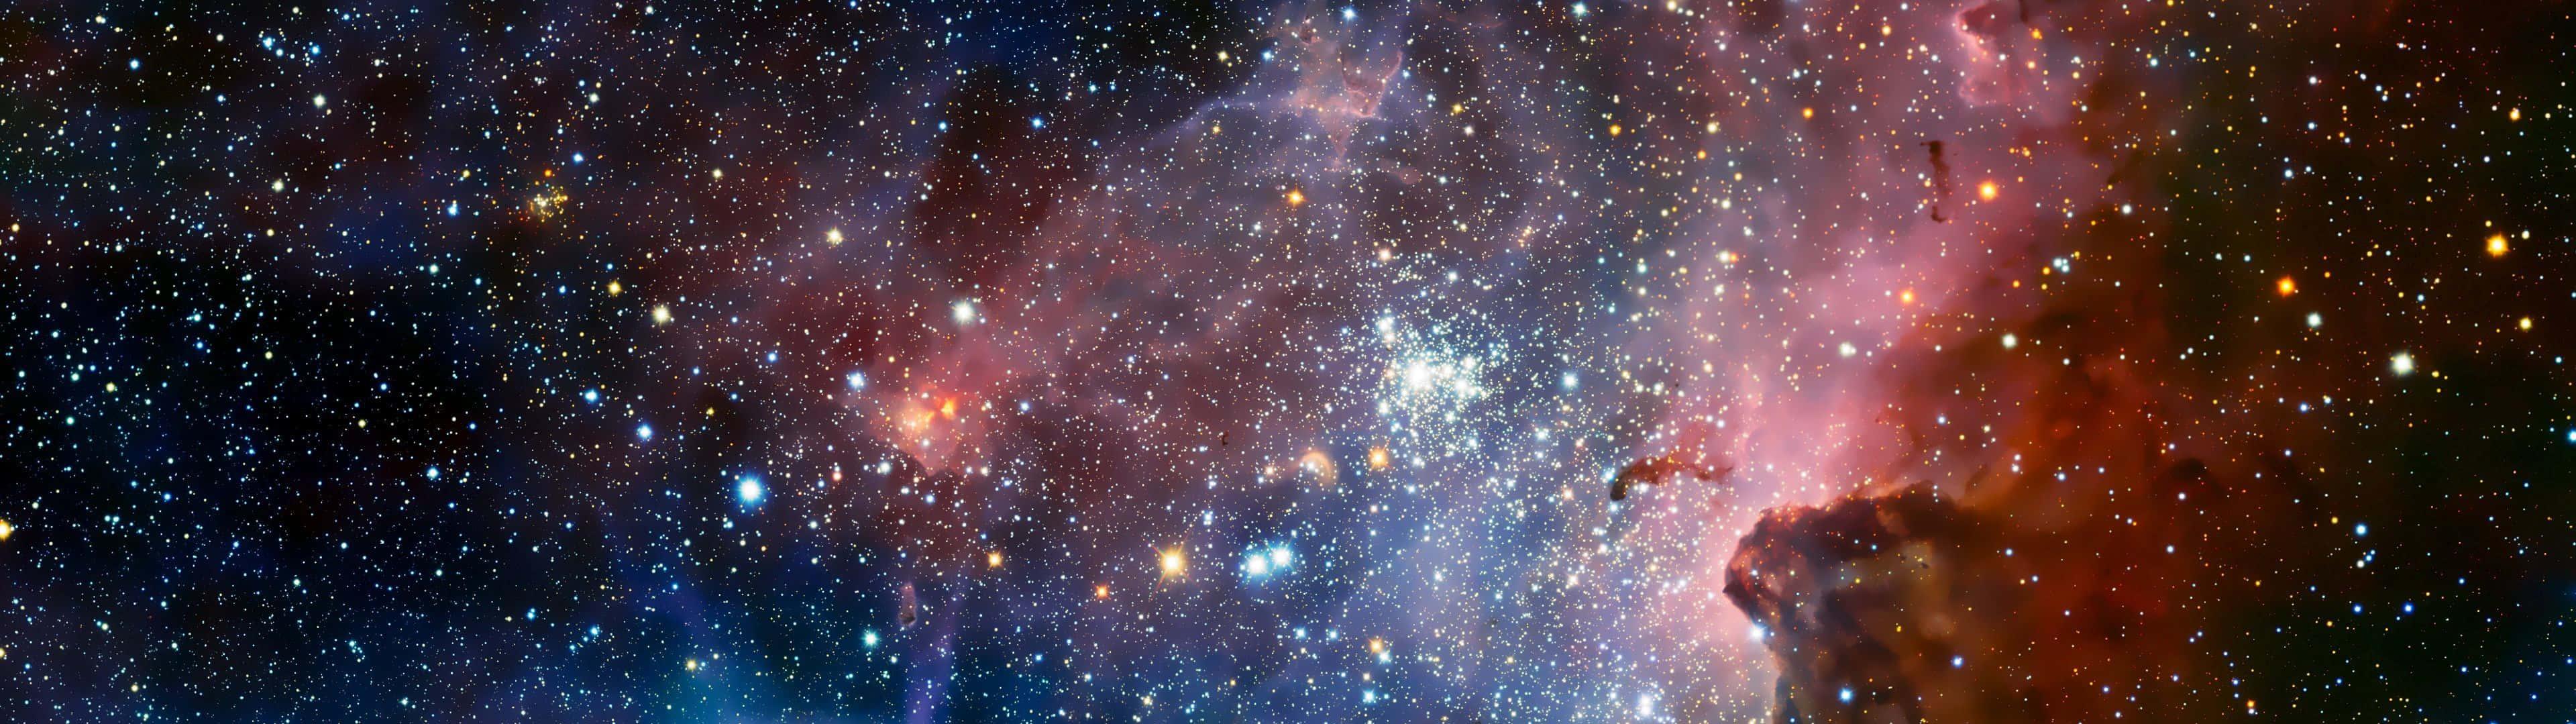 Space HD Galaxy Wallpaper